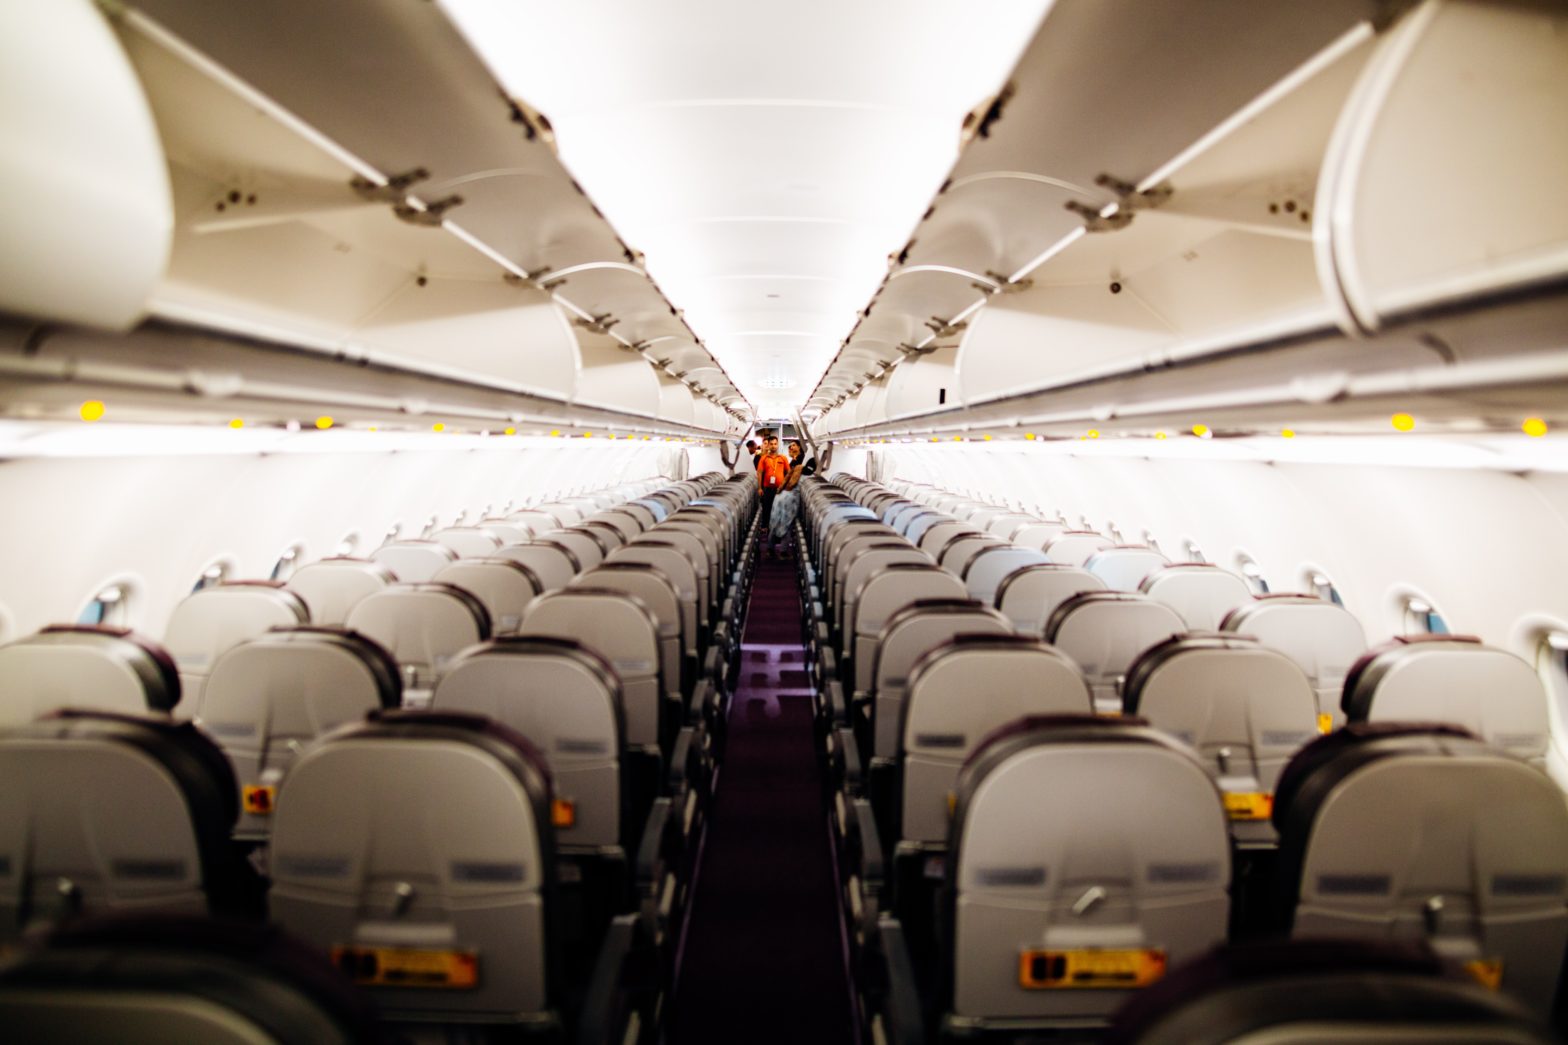 Passenger Urinates On Plane Floor During Takeoff